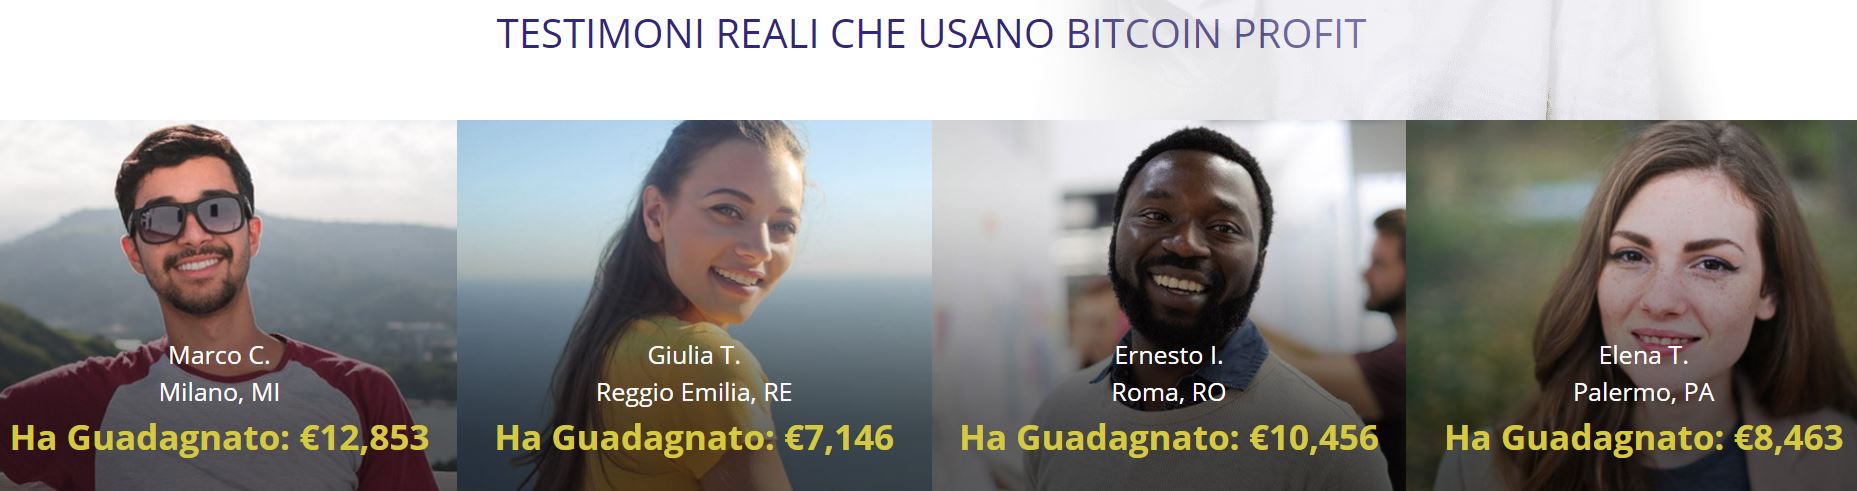 testimonianze Bitcoin profit italiano